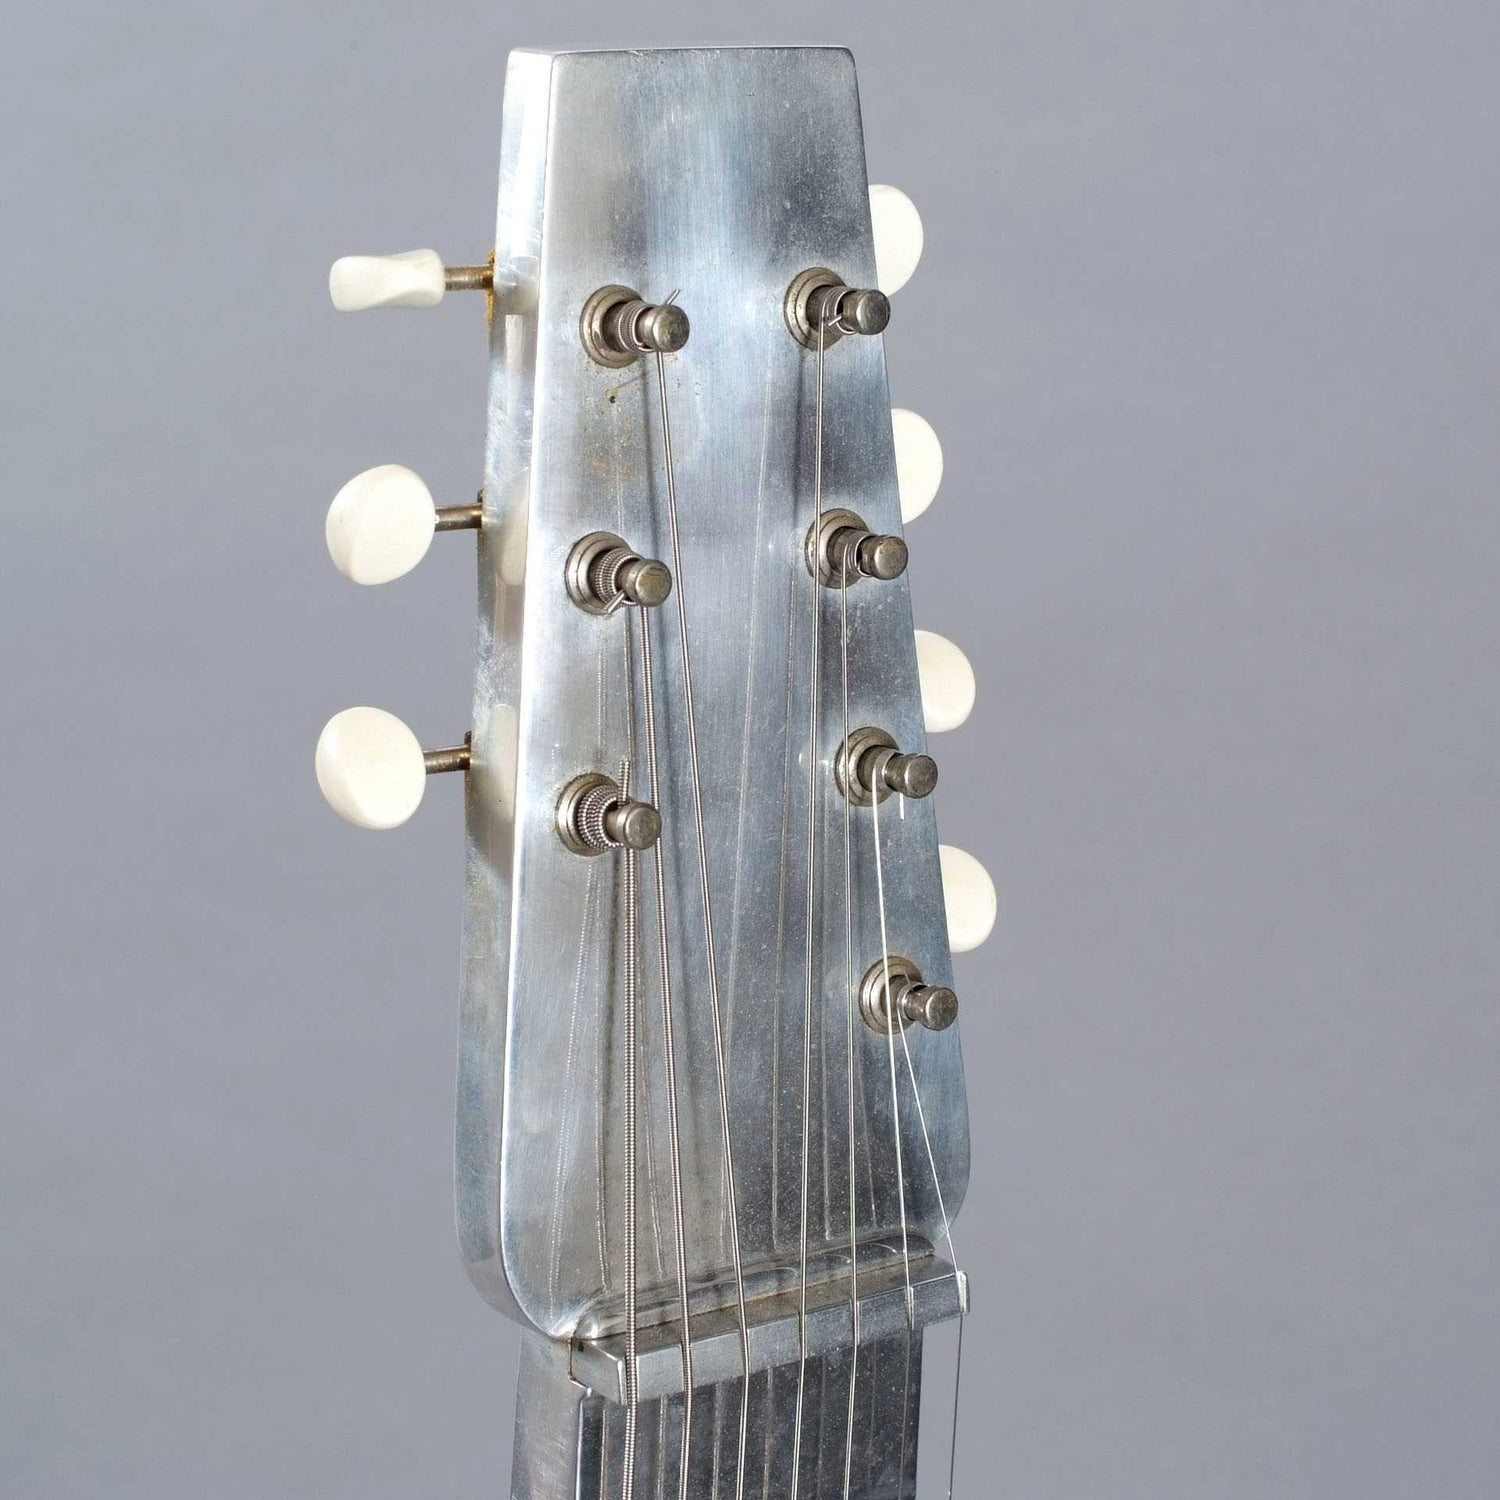 Image 6 of No Name Lap Steel (1940's?) - SKU# 185U-761 : Product Type Lap & Pedal Steel Guitars : Elderly Instruments